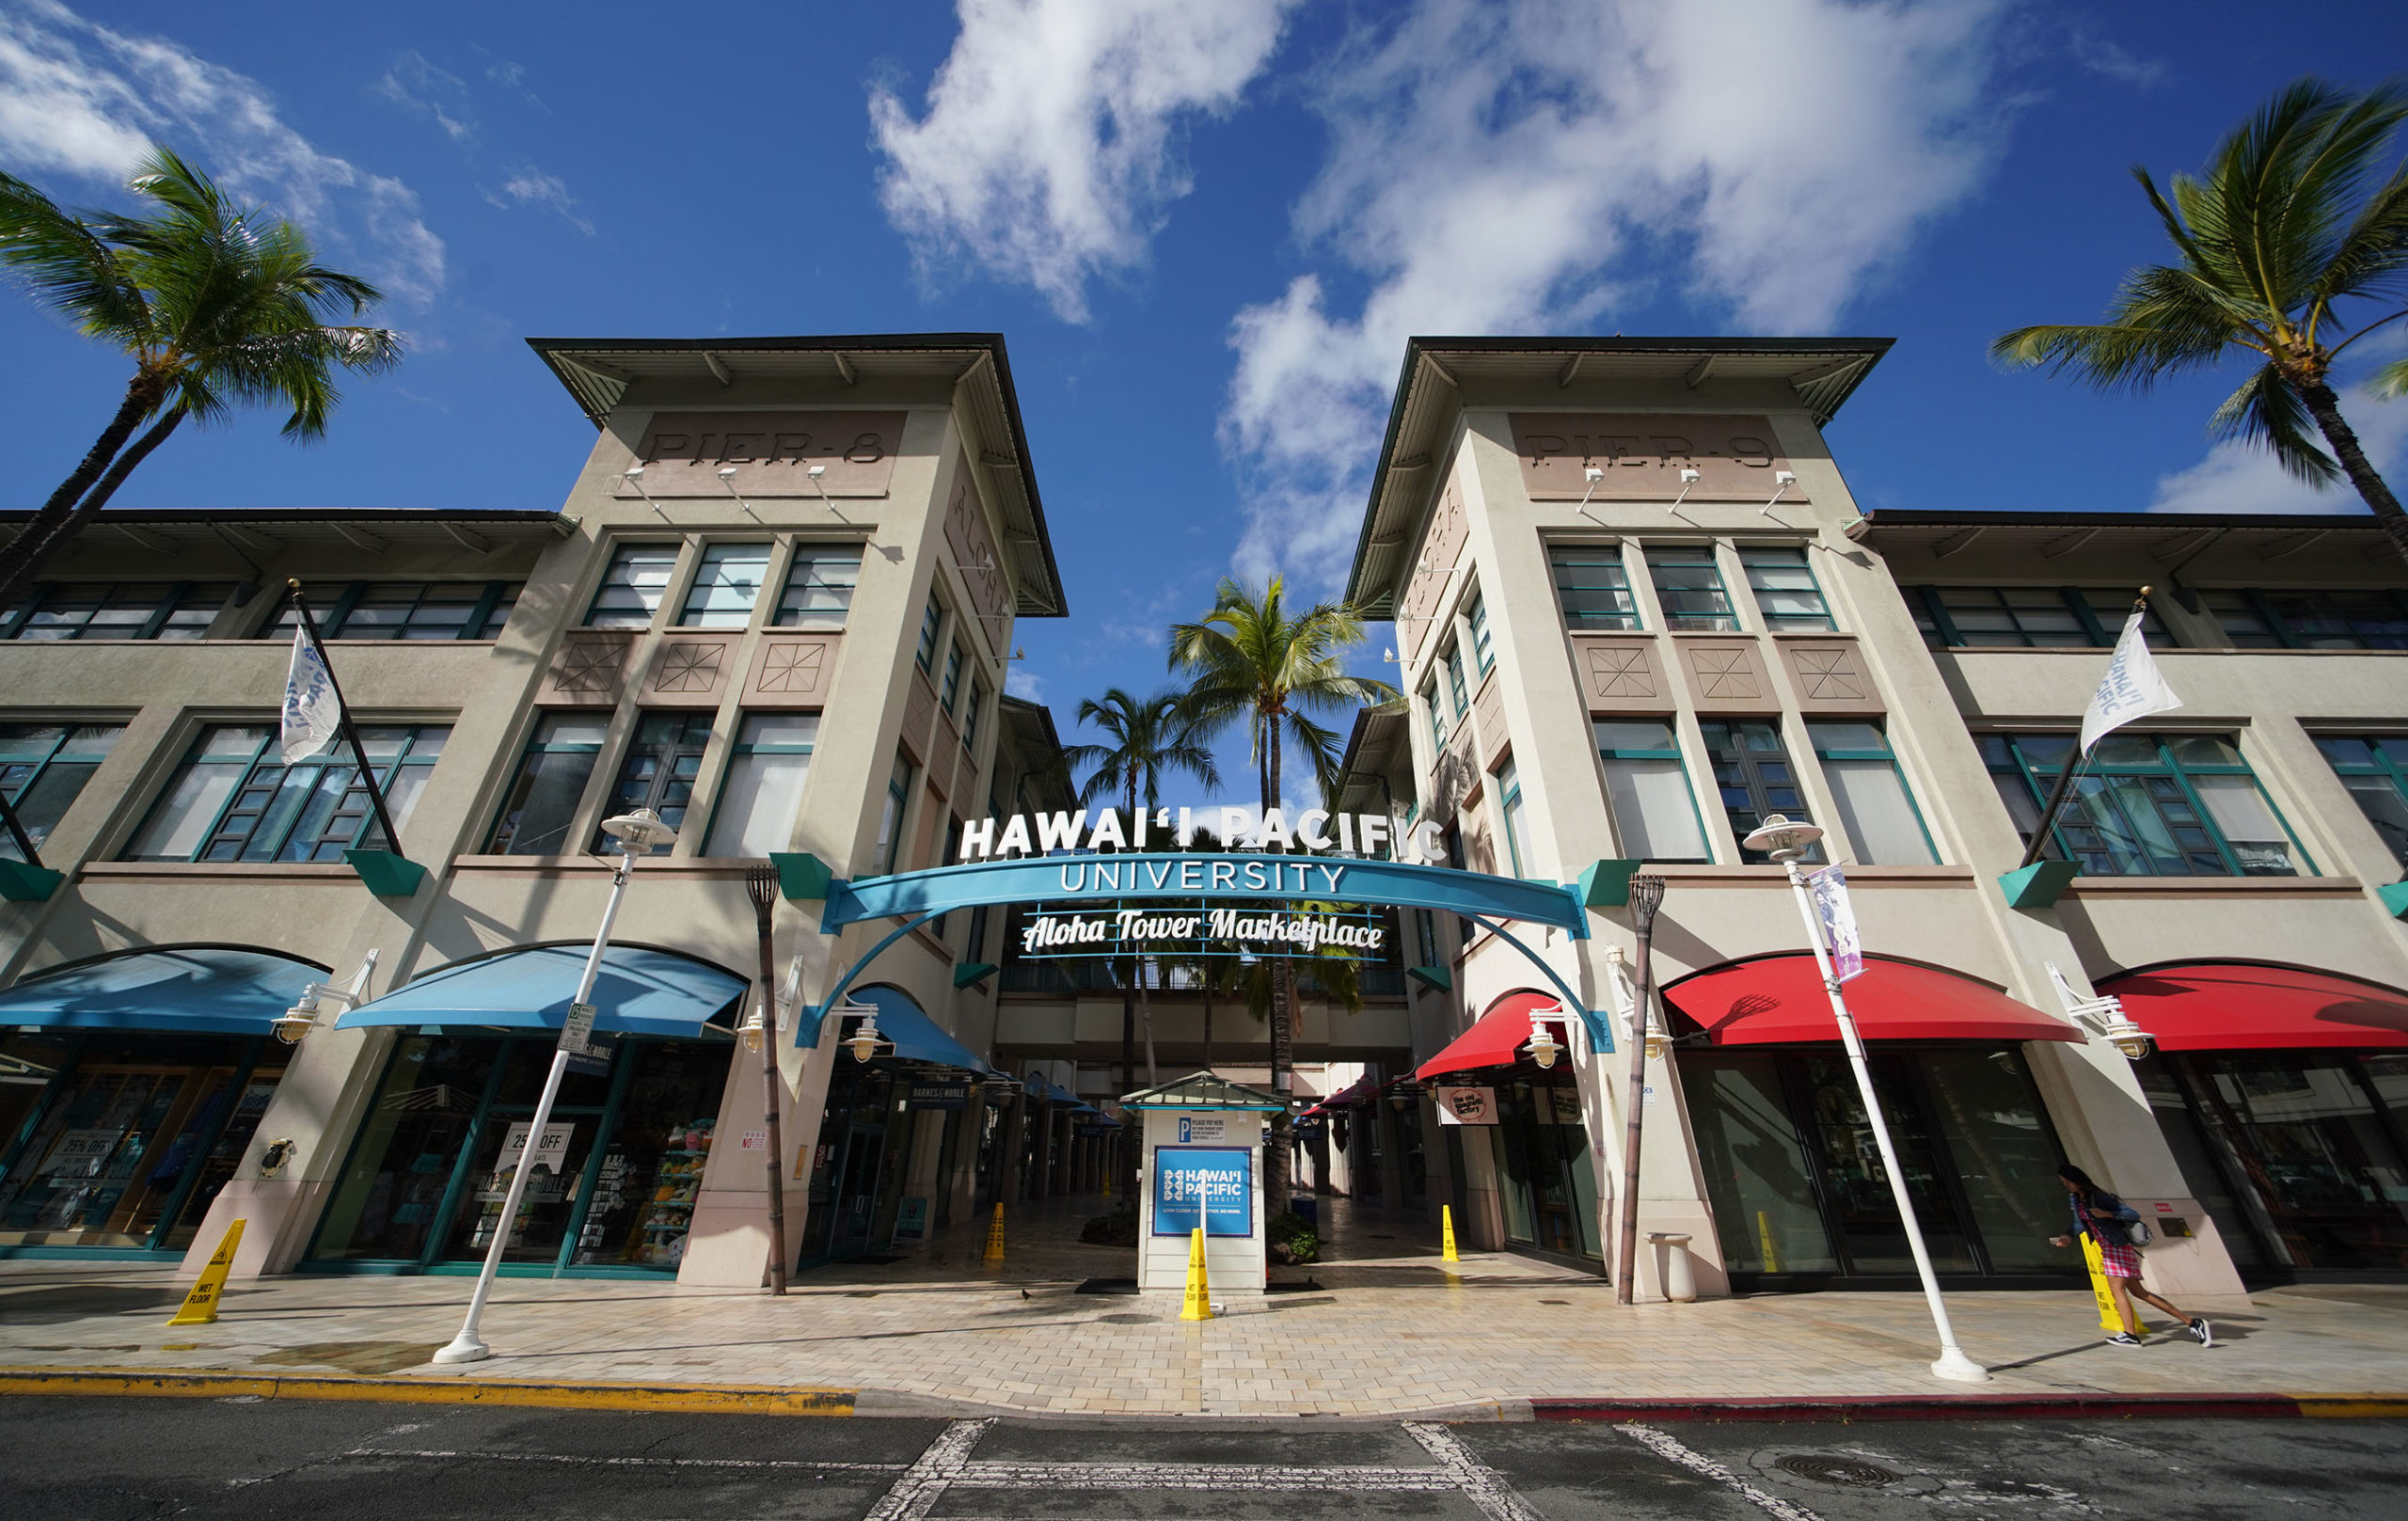 Hawaii Pacific University Aloha Tower Marketplace front entrance.